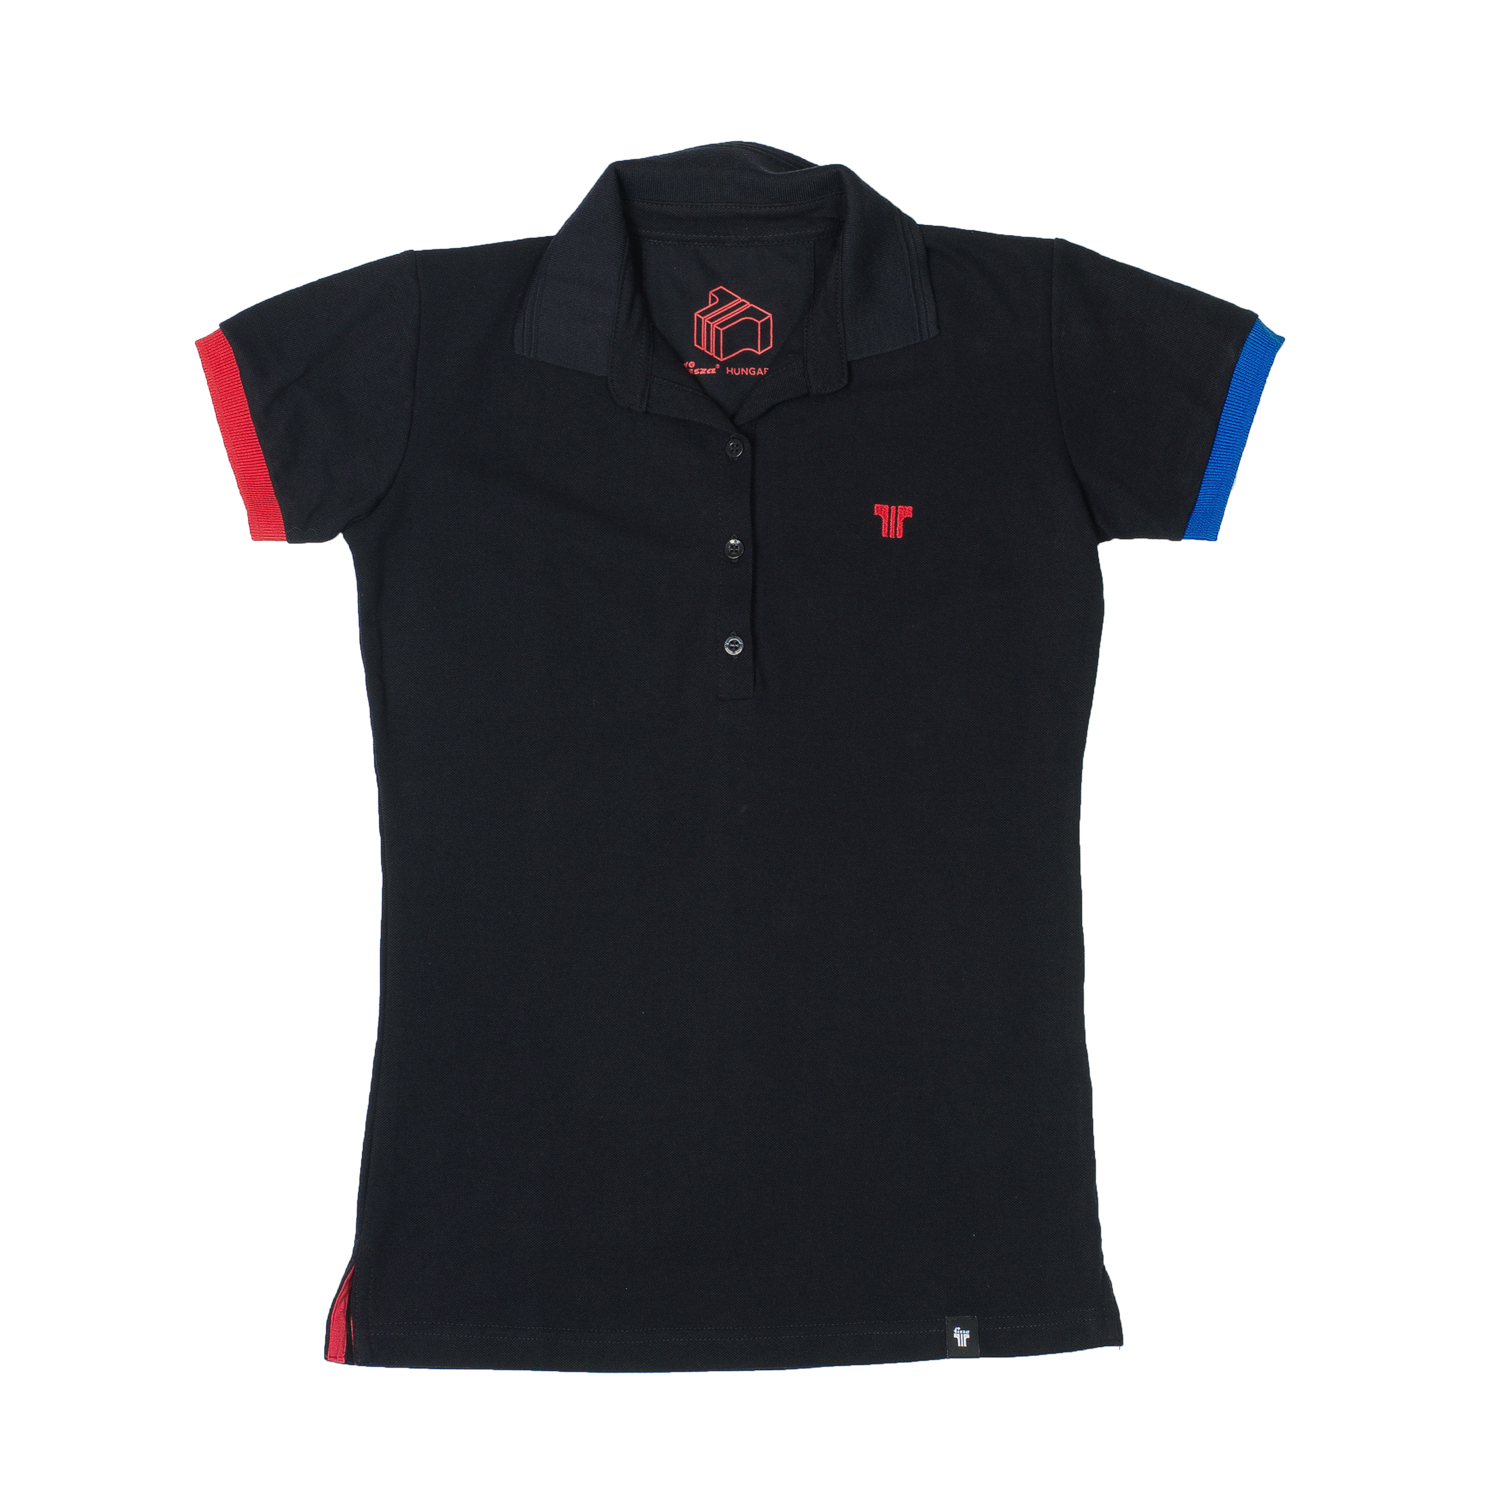 Tisza shoes-Women tennis shirt black-red-blue